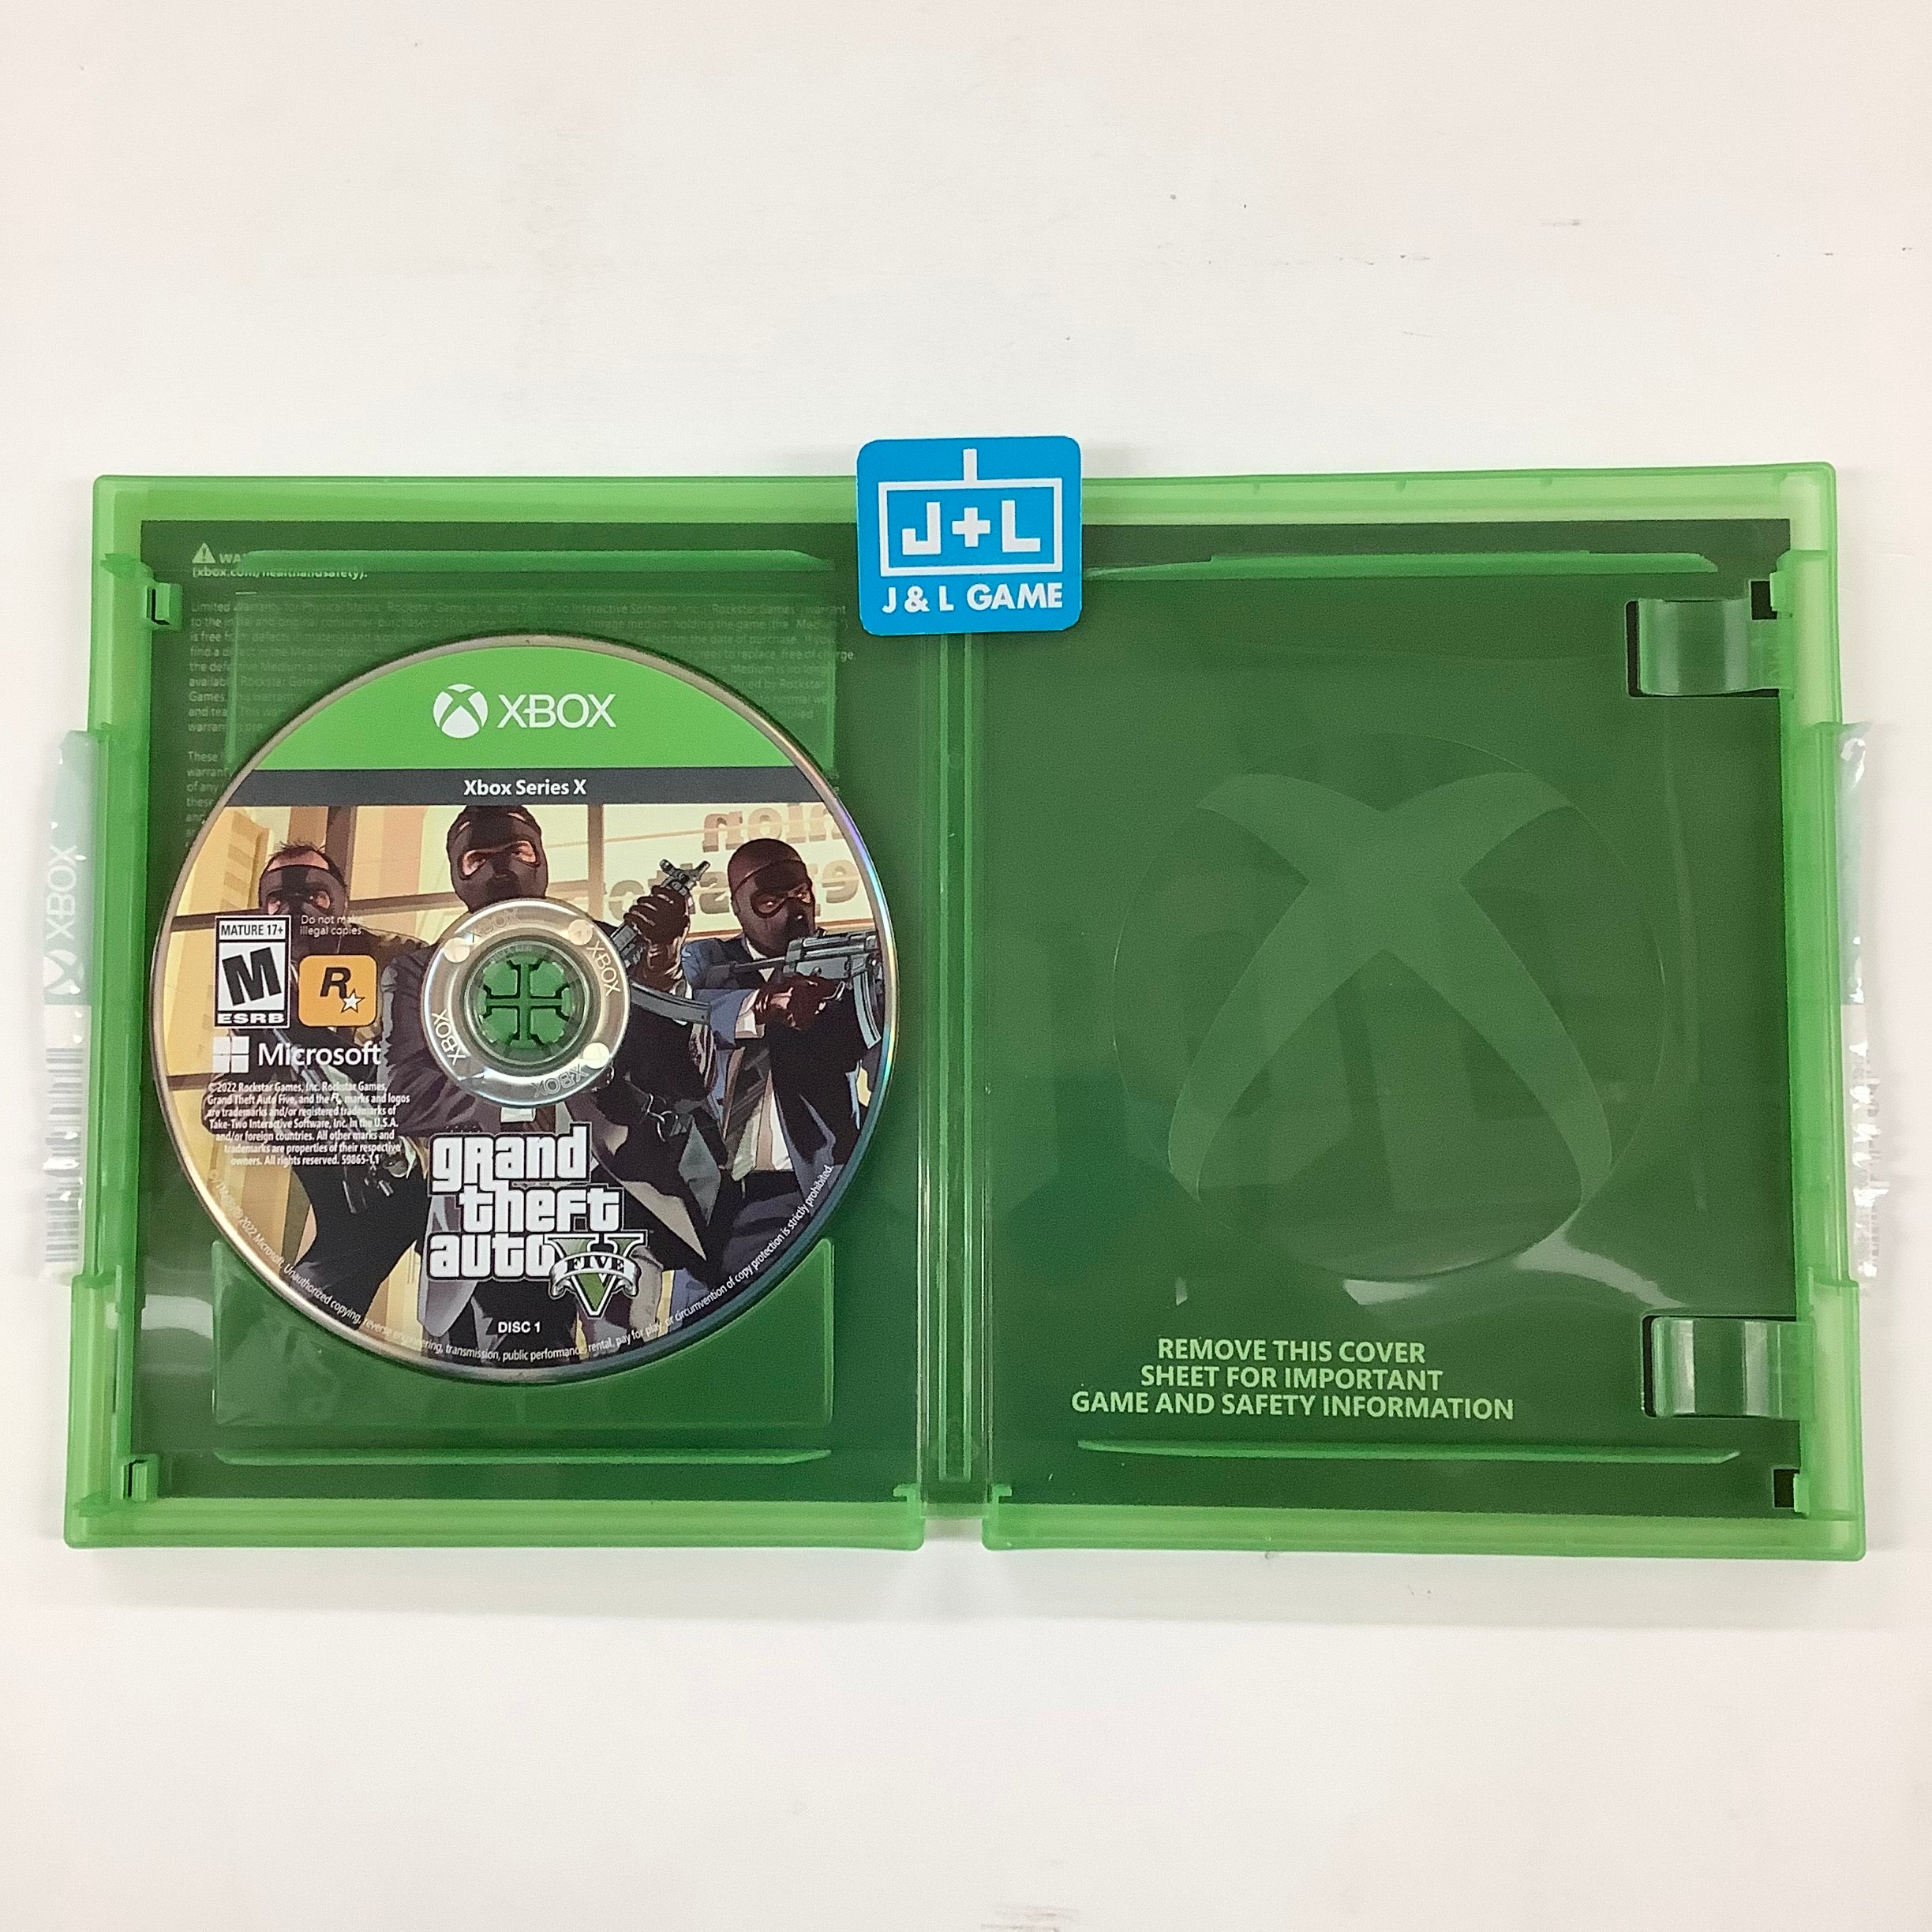 Grand Theft Auto V - (XSX) Xbox Series X [UNBOXING] Video Games Rockstar Games   